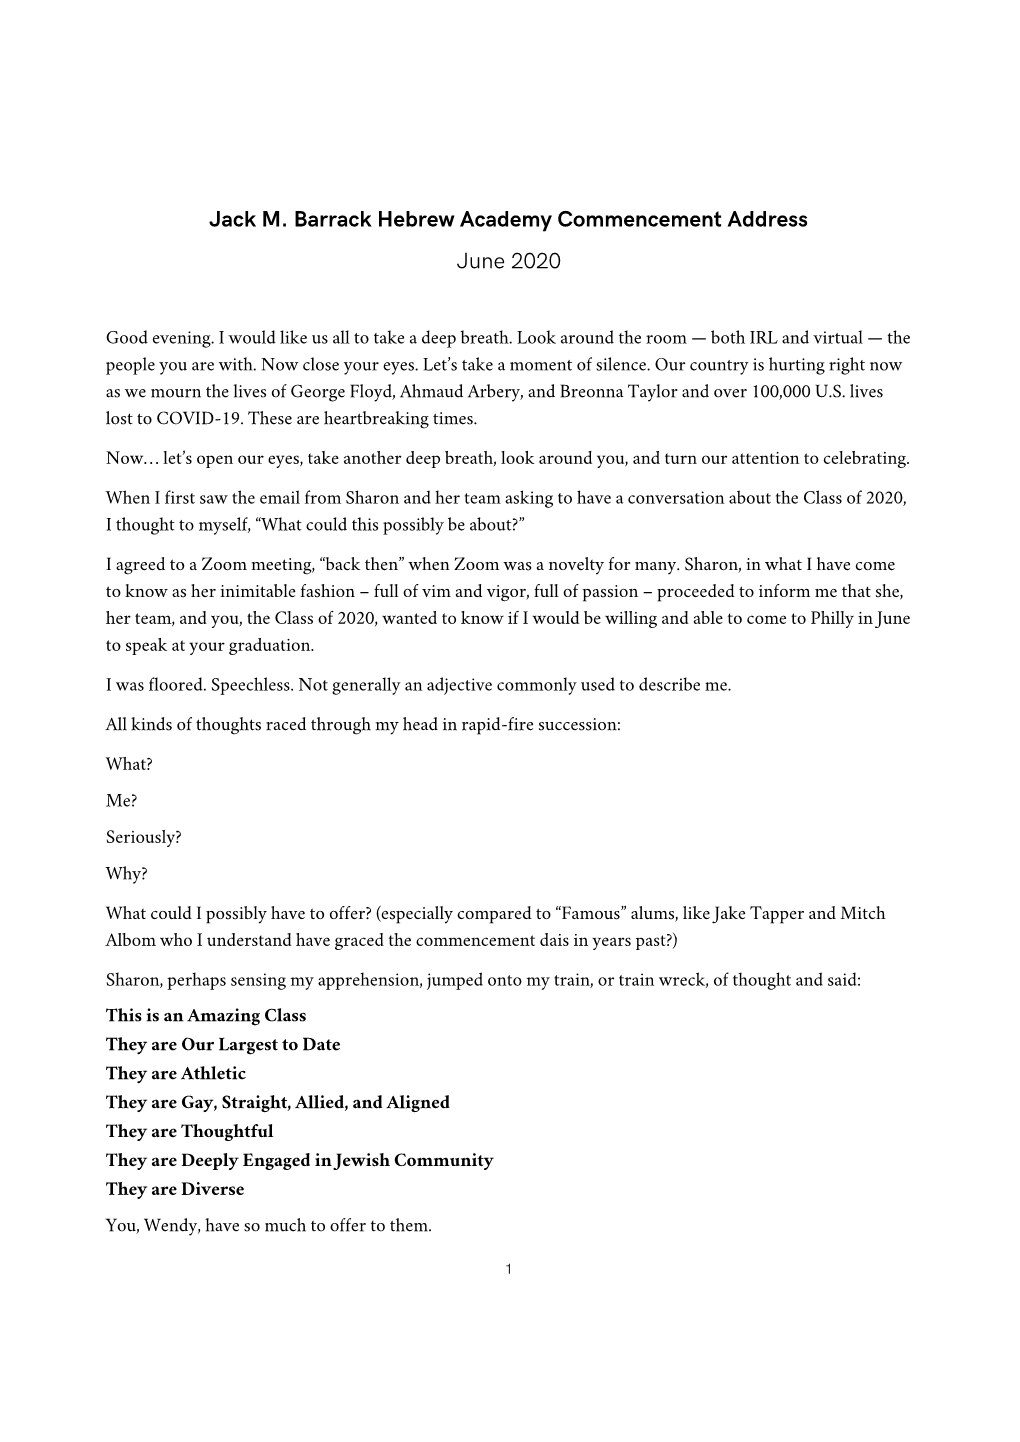 Jack M. Barrack Hebrew Academy Commencement Address June 2020